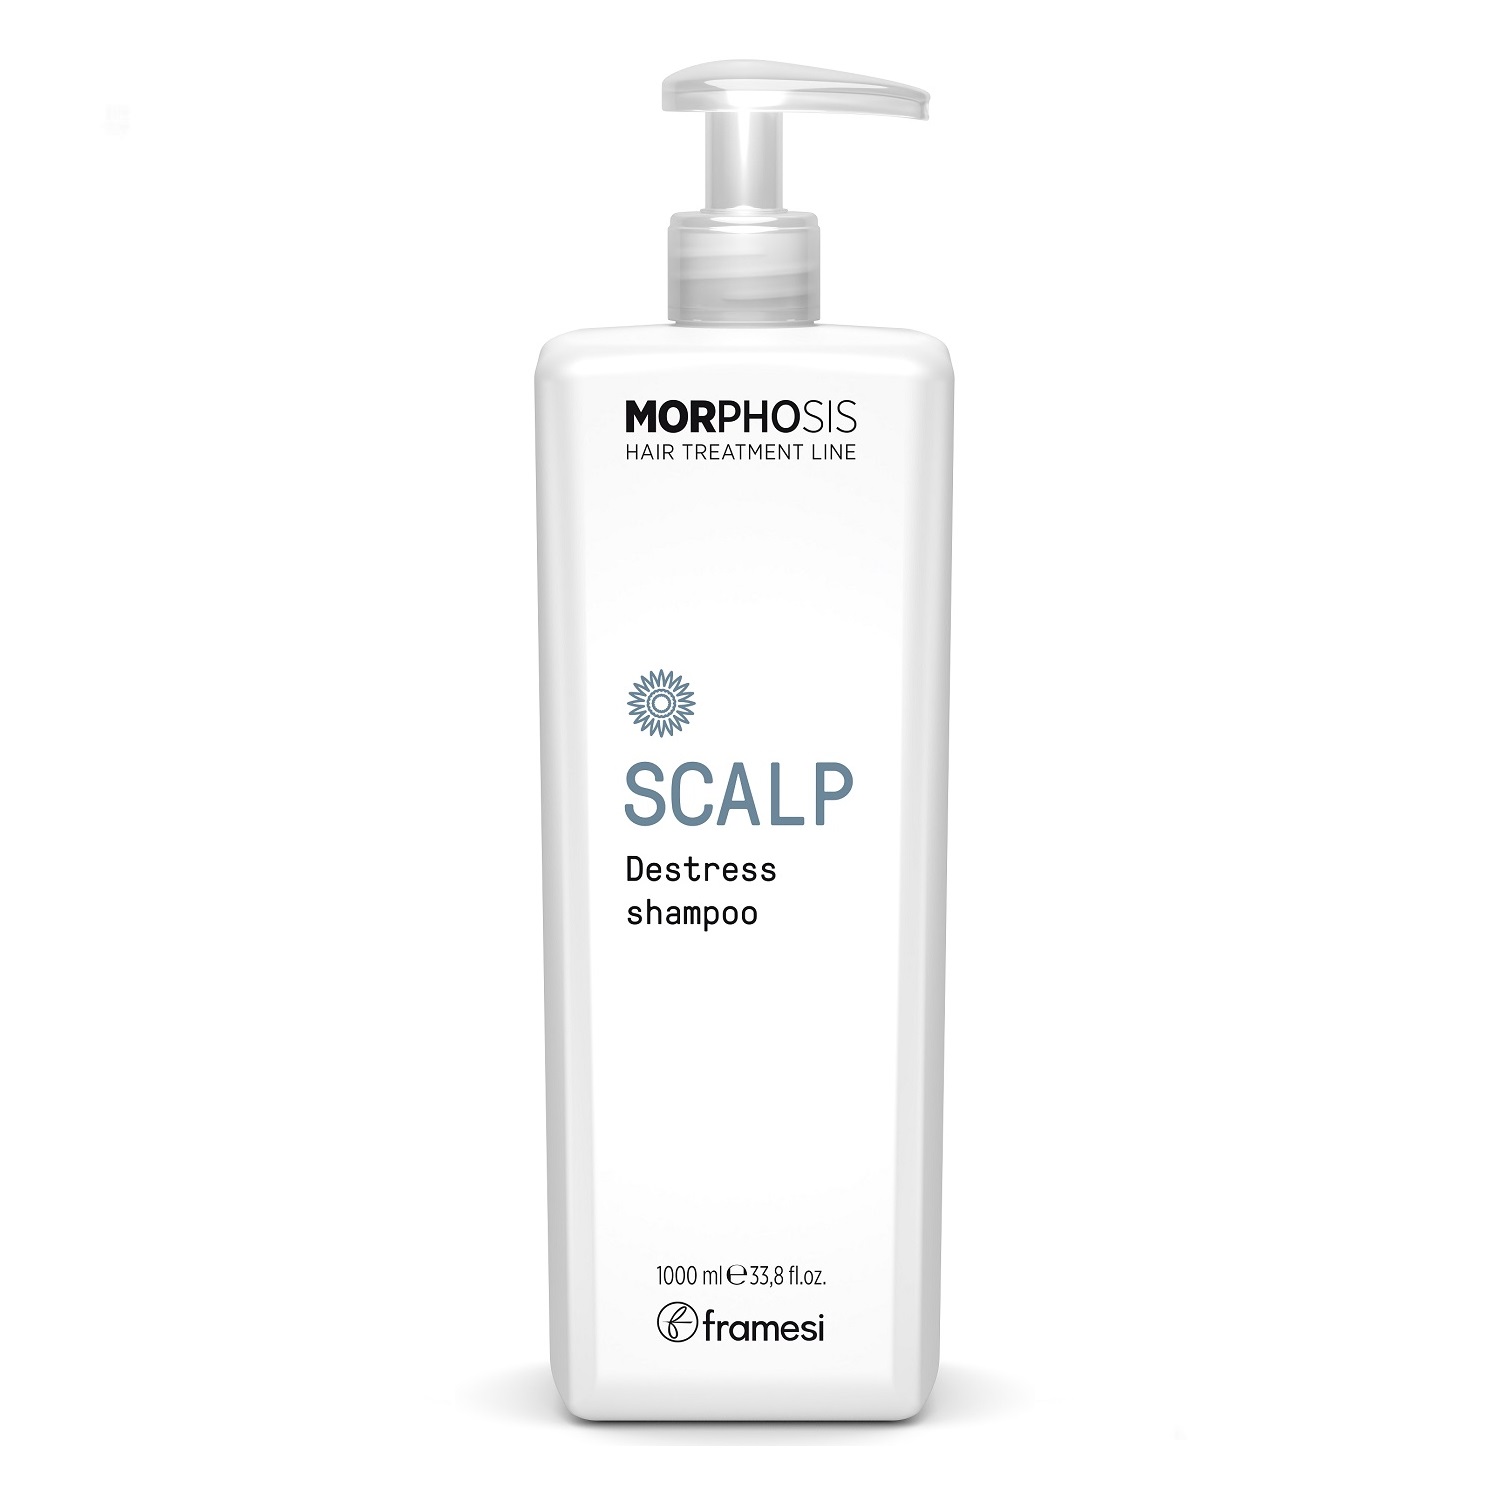 FRAMESI Шампунь для чувствительной кожи головы Scalp Destress Shampoo, 1000 мл (FRAMESI, Morphosis) framesi детокс эссенция для кожи головы morphosis scalp detox essence